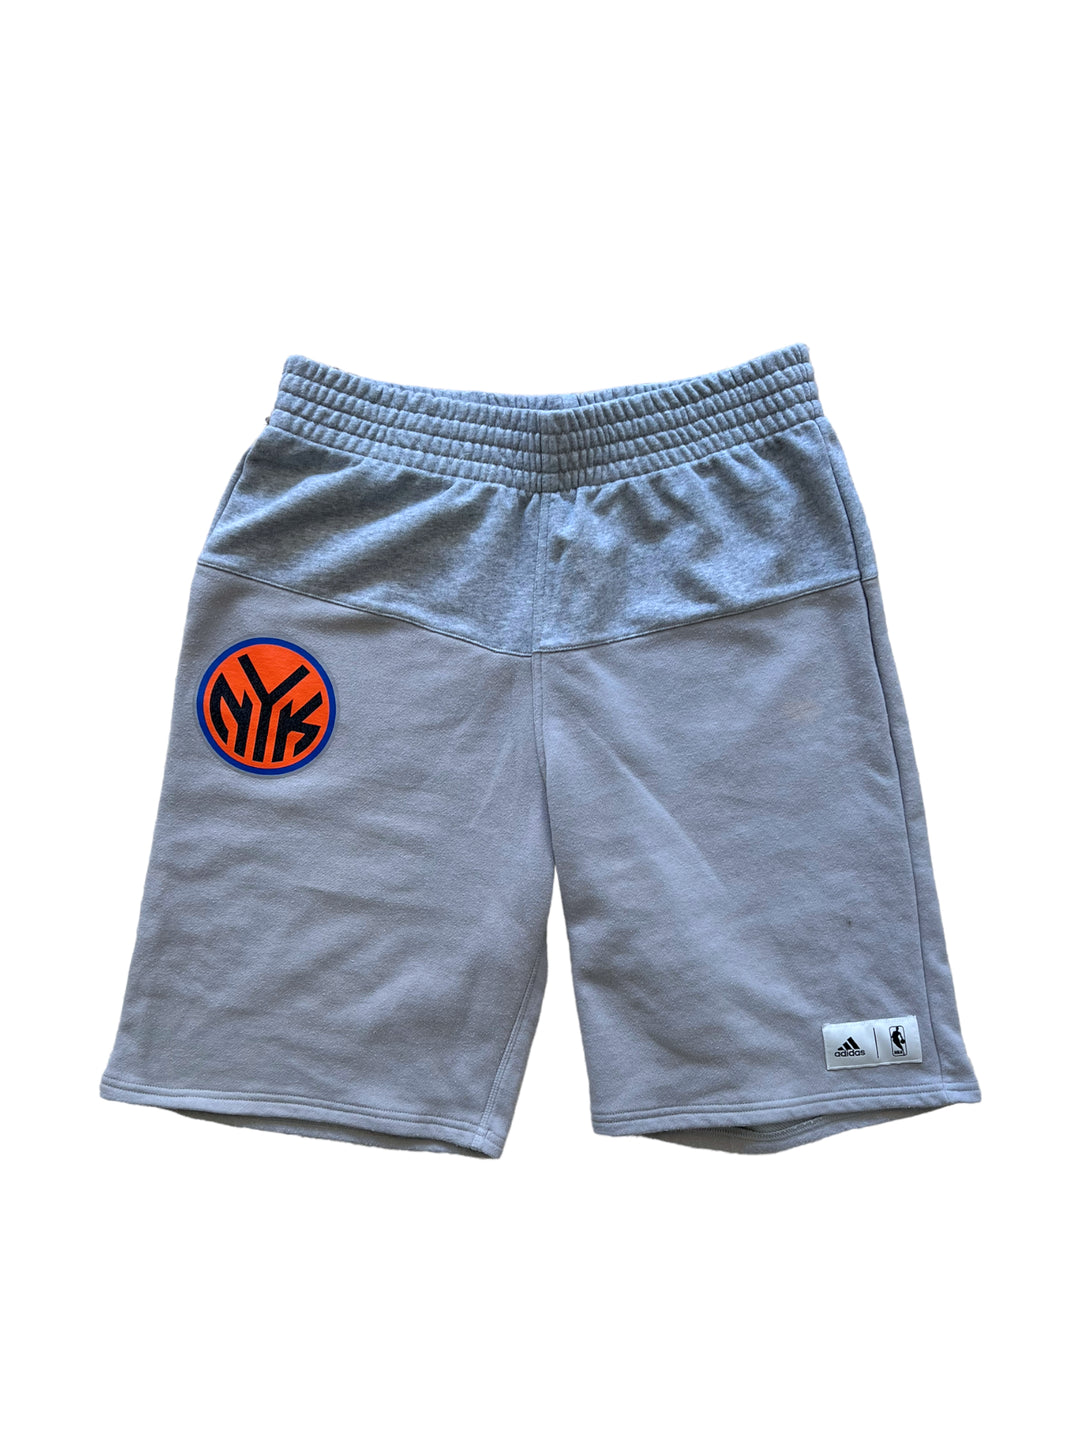 Vintage Adidas NBA Cotton Shorts Men’s Medium